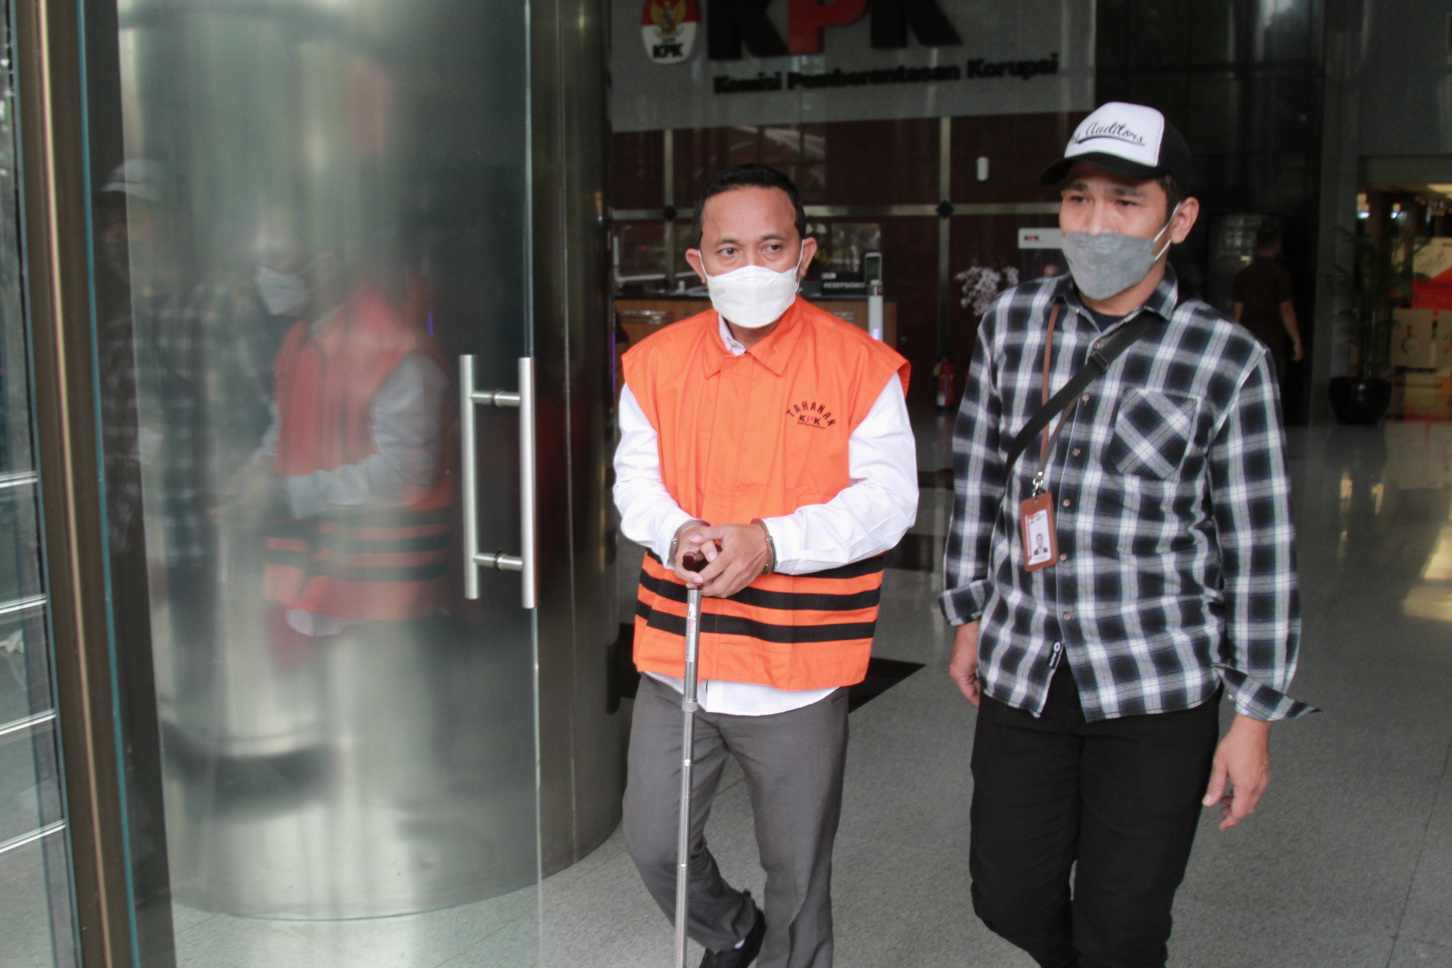 Tersangka Kepala Desa Jaglung, Kabupaten Sampang, Madura selesai menjalani pemeriksaan di Gedung Merah Putih KPK terkait kasus dana hibah Provinsi Jawa Timur (Ashar/SinPo.id)